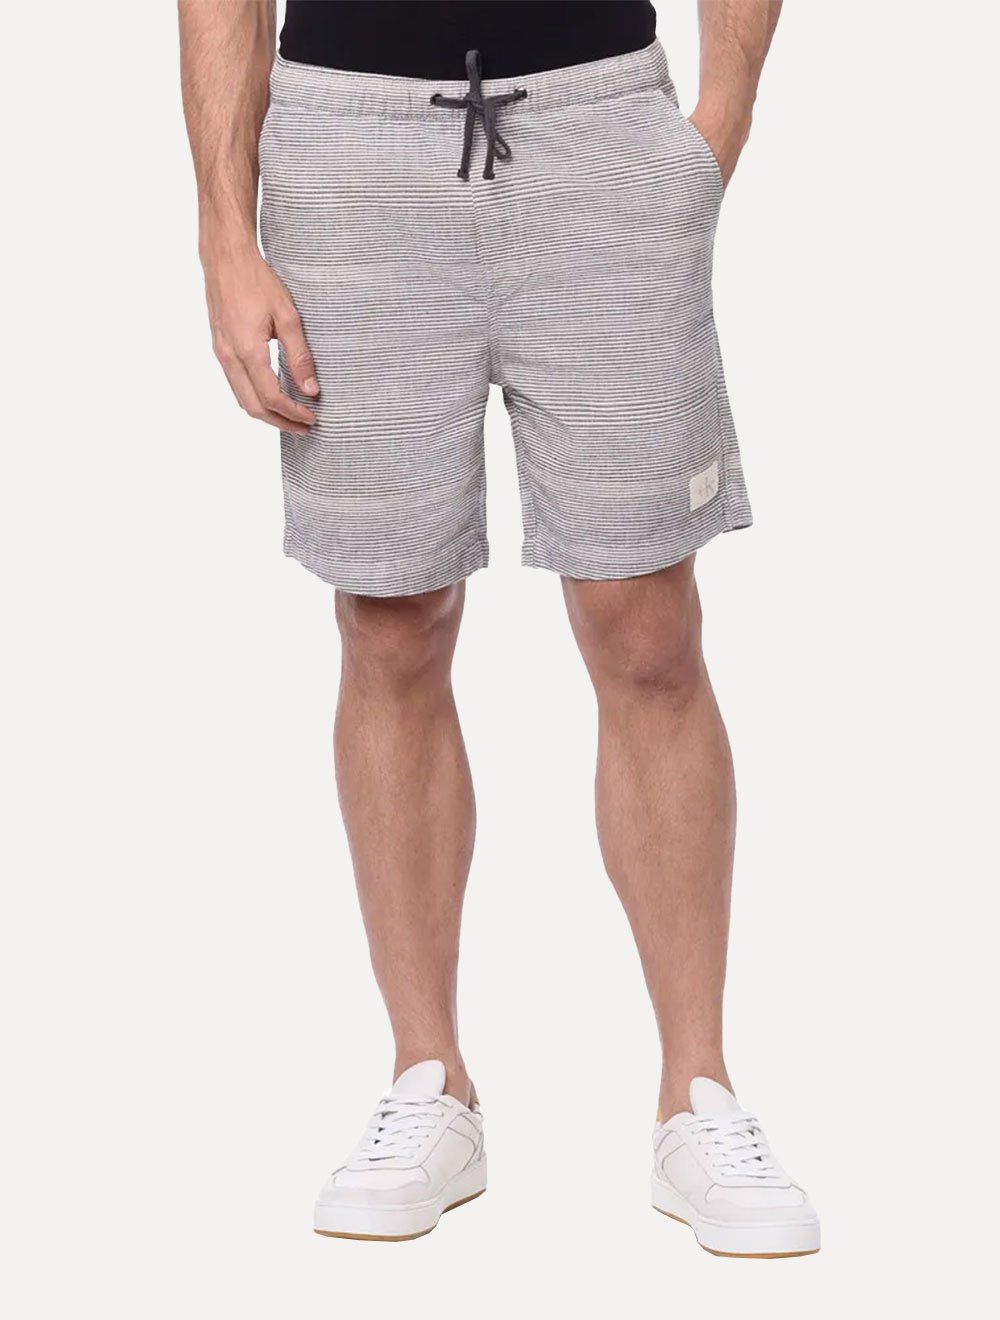 Bermuda Calvin Klein Jeans Masculina Elástico Listras Chumbo Off-White